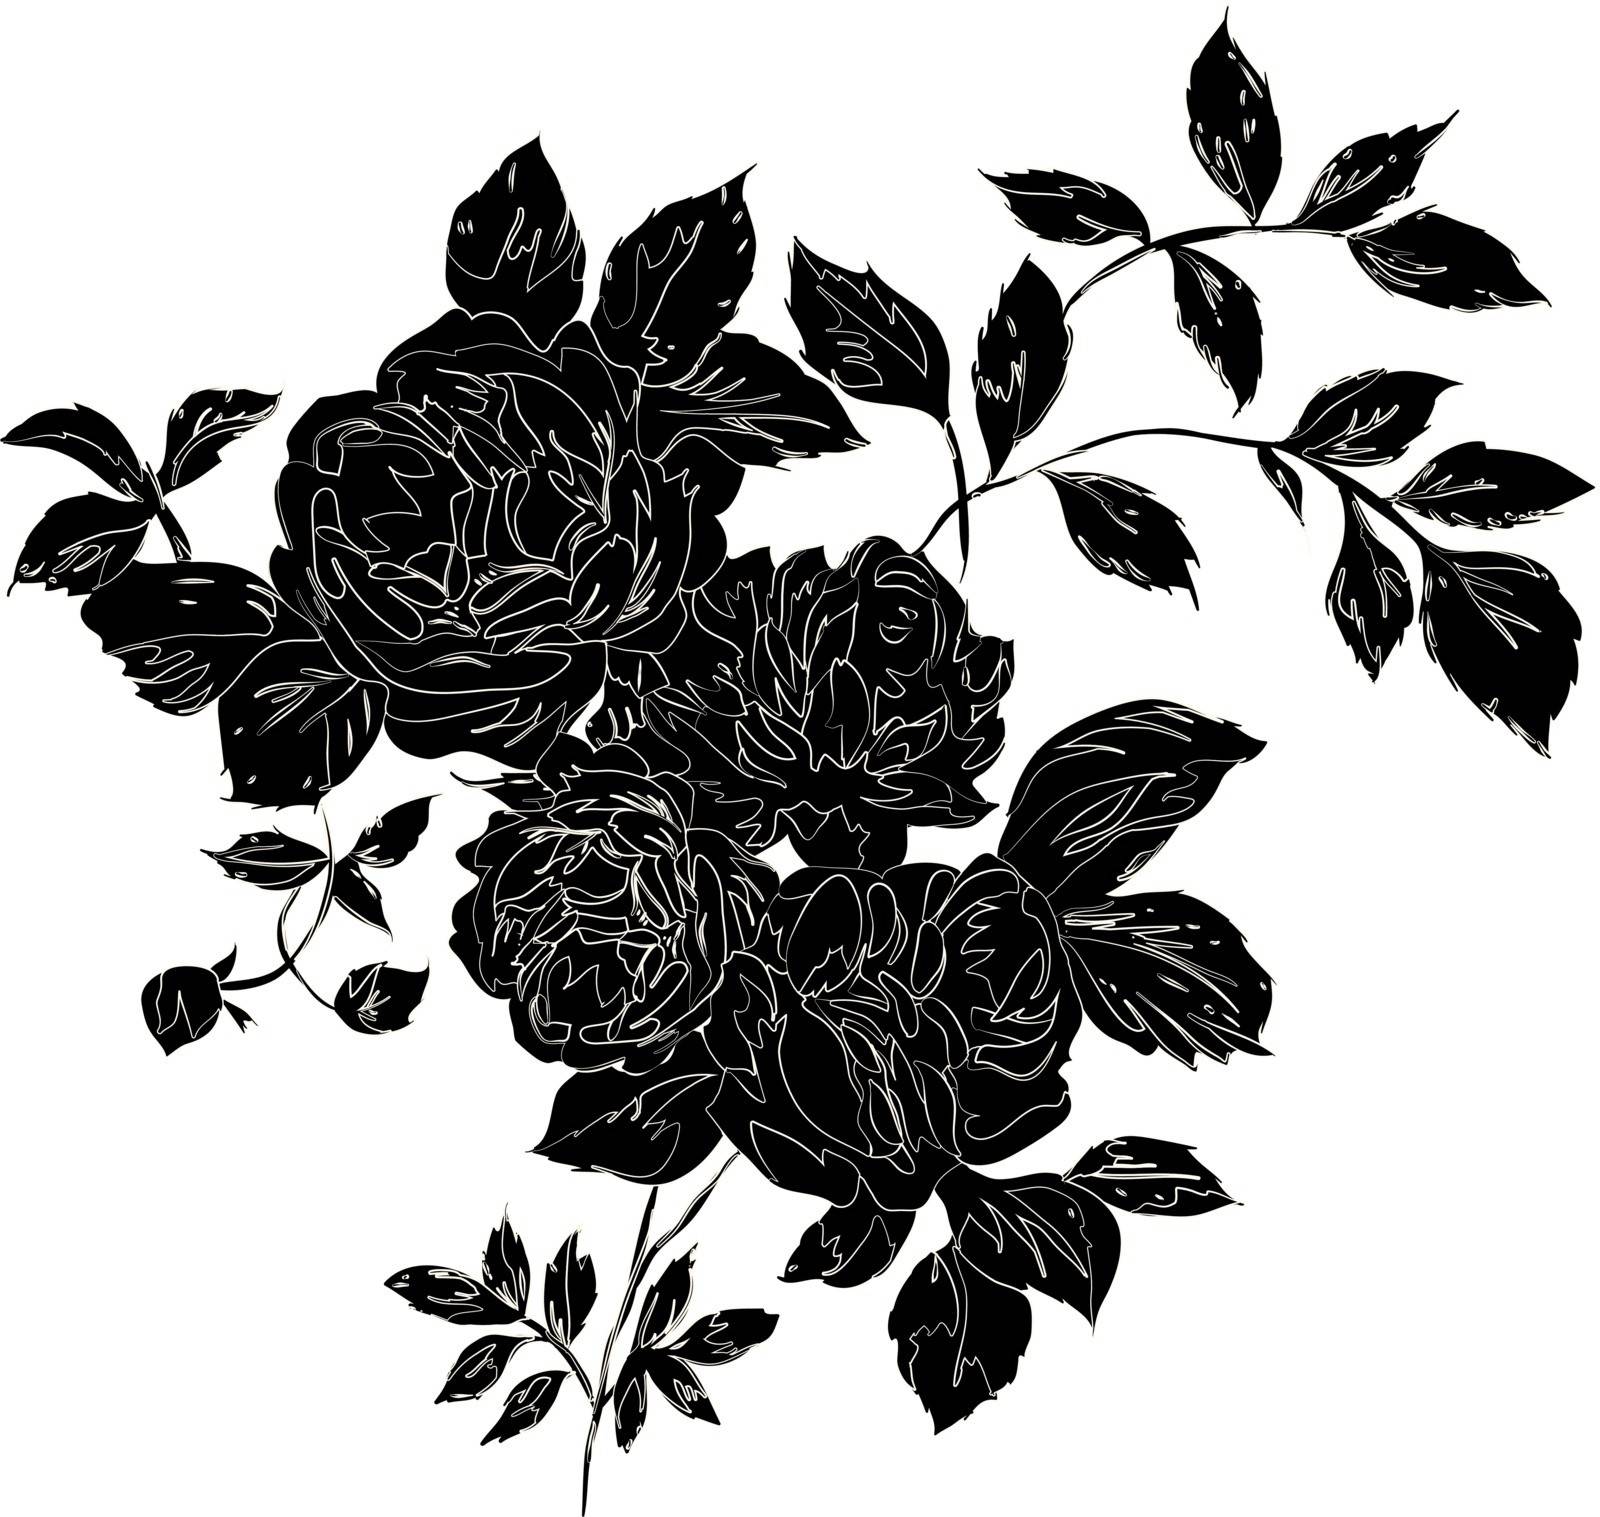 Black rose by HypnoCreative